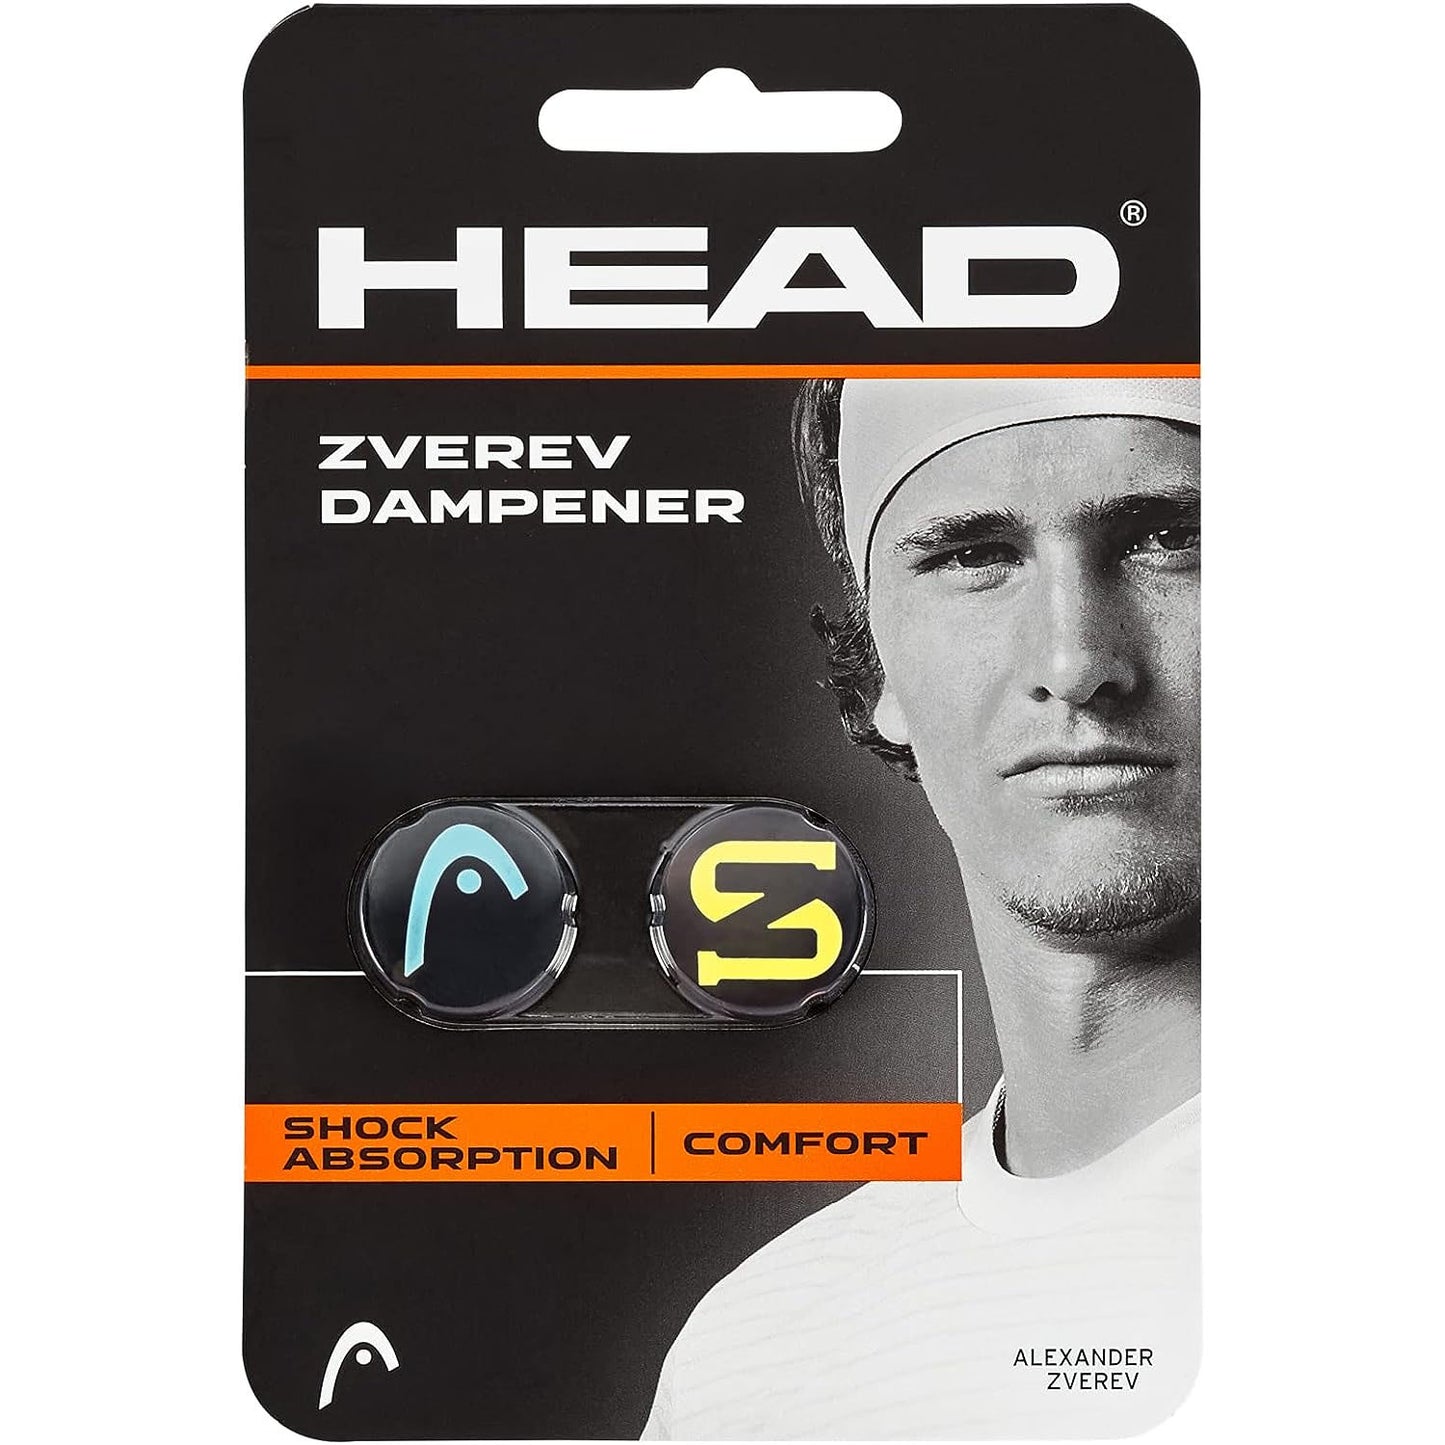 Head ZVEREV Tennis Dampner (Blue/Yellow) - Best Price online Prokicksports.com